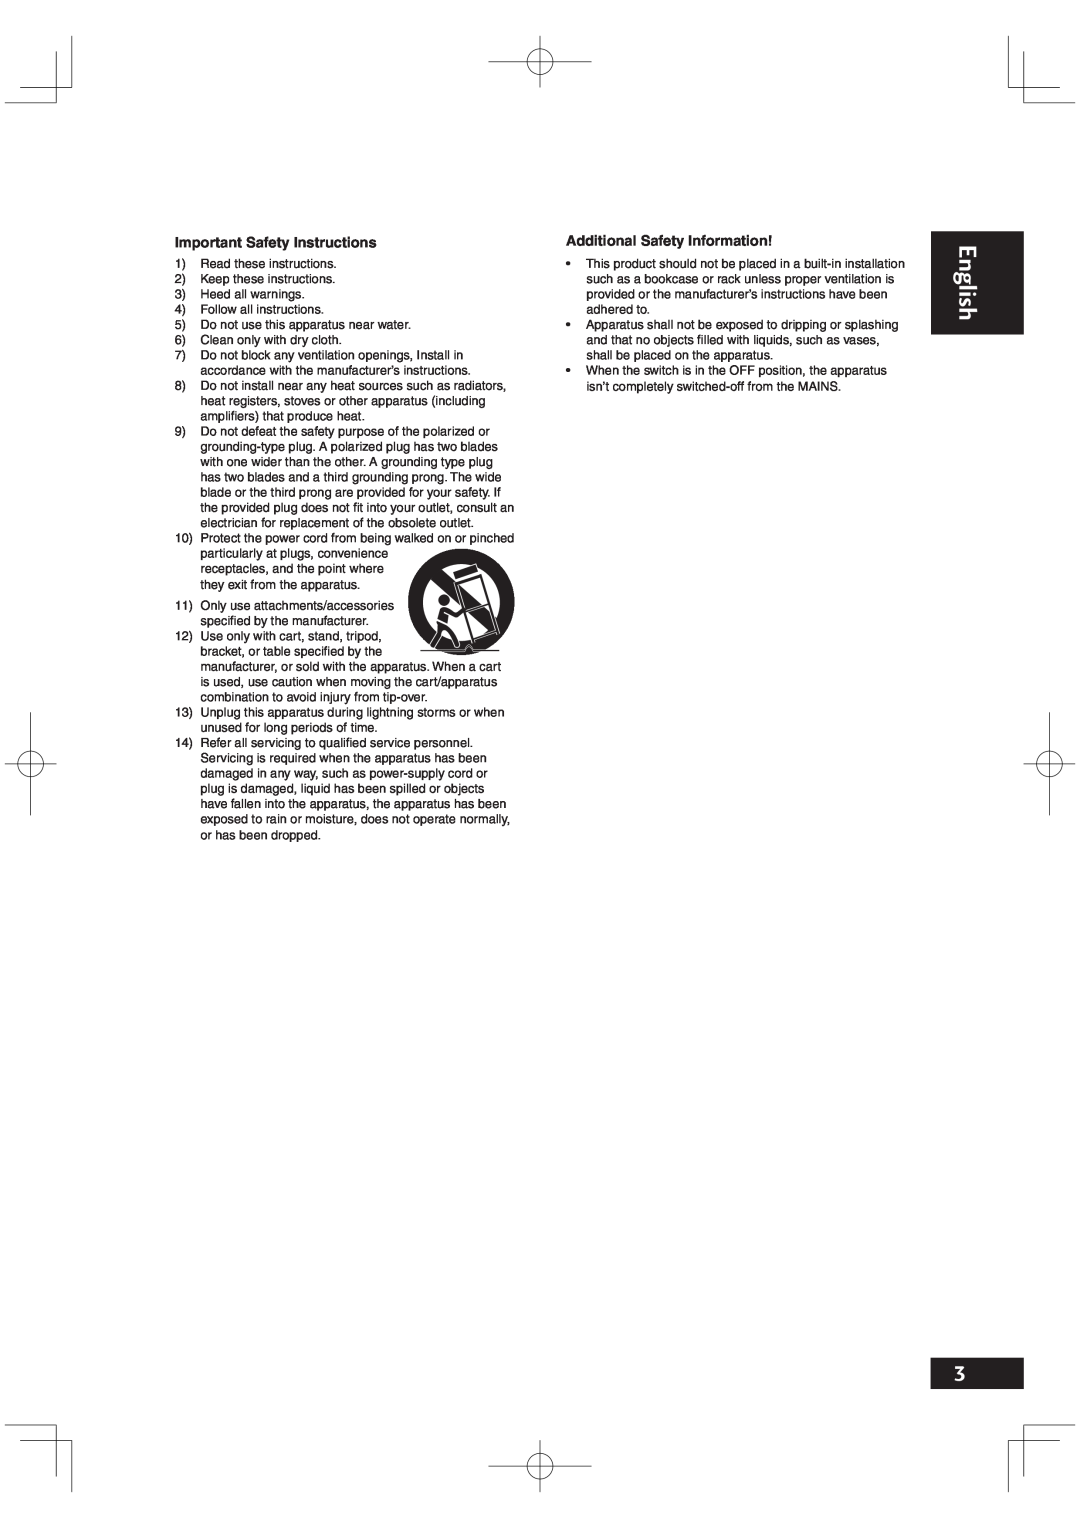 Marantz VC6001 manual English, Important Safety Instructions, Additional Safety Information 